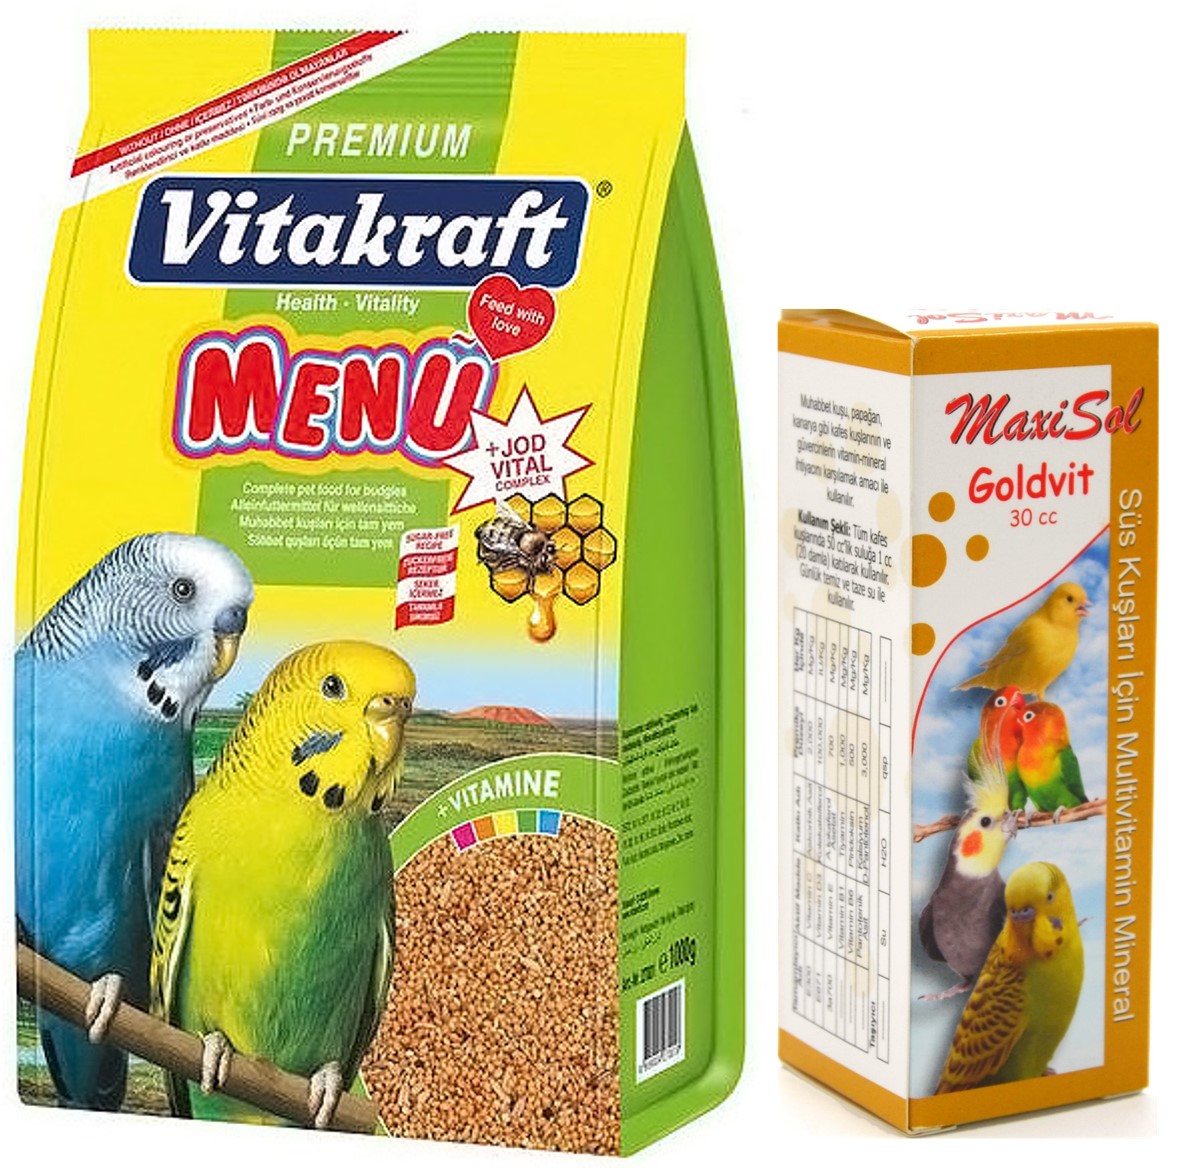 Vitakraft Premium Menu Muhabbet 1kg + Goldvit 30cc ötüm Ve Enerji Vitamin Seti